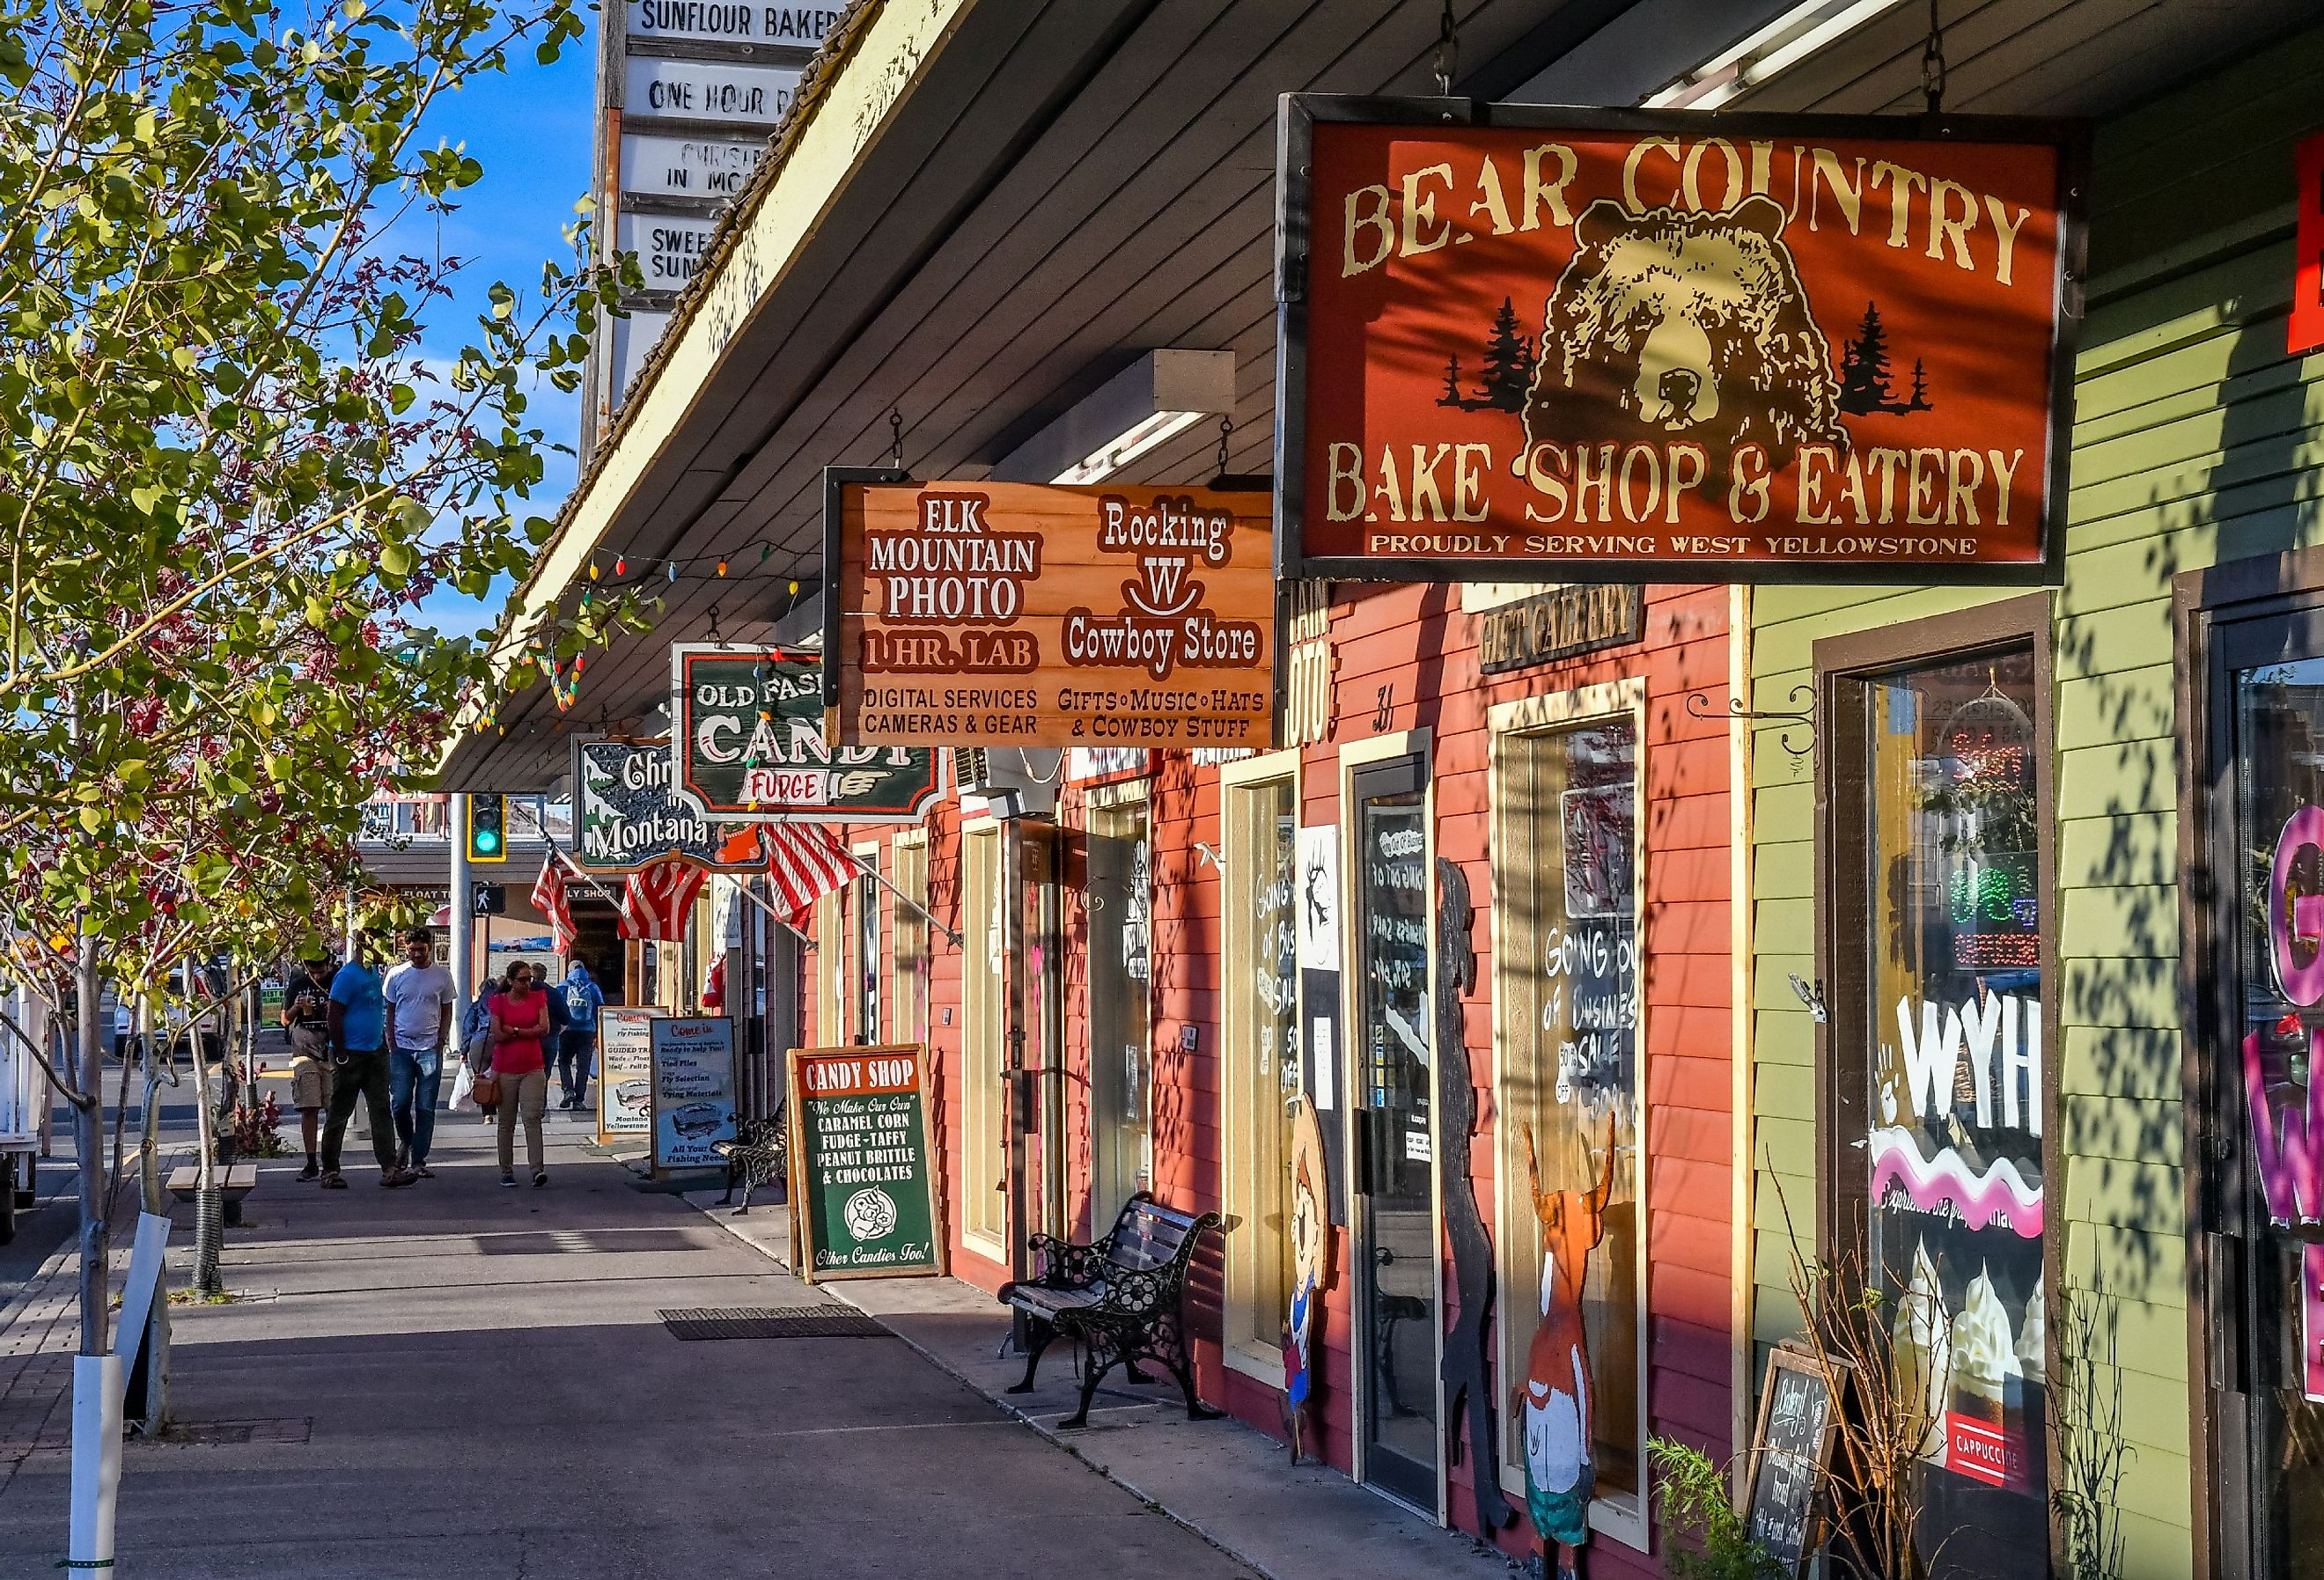 Shops along Canyon Street, West Yellowstone, Montana. Image credit Matthew Thomas Allen via Shutterstock